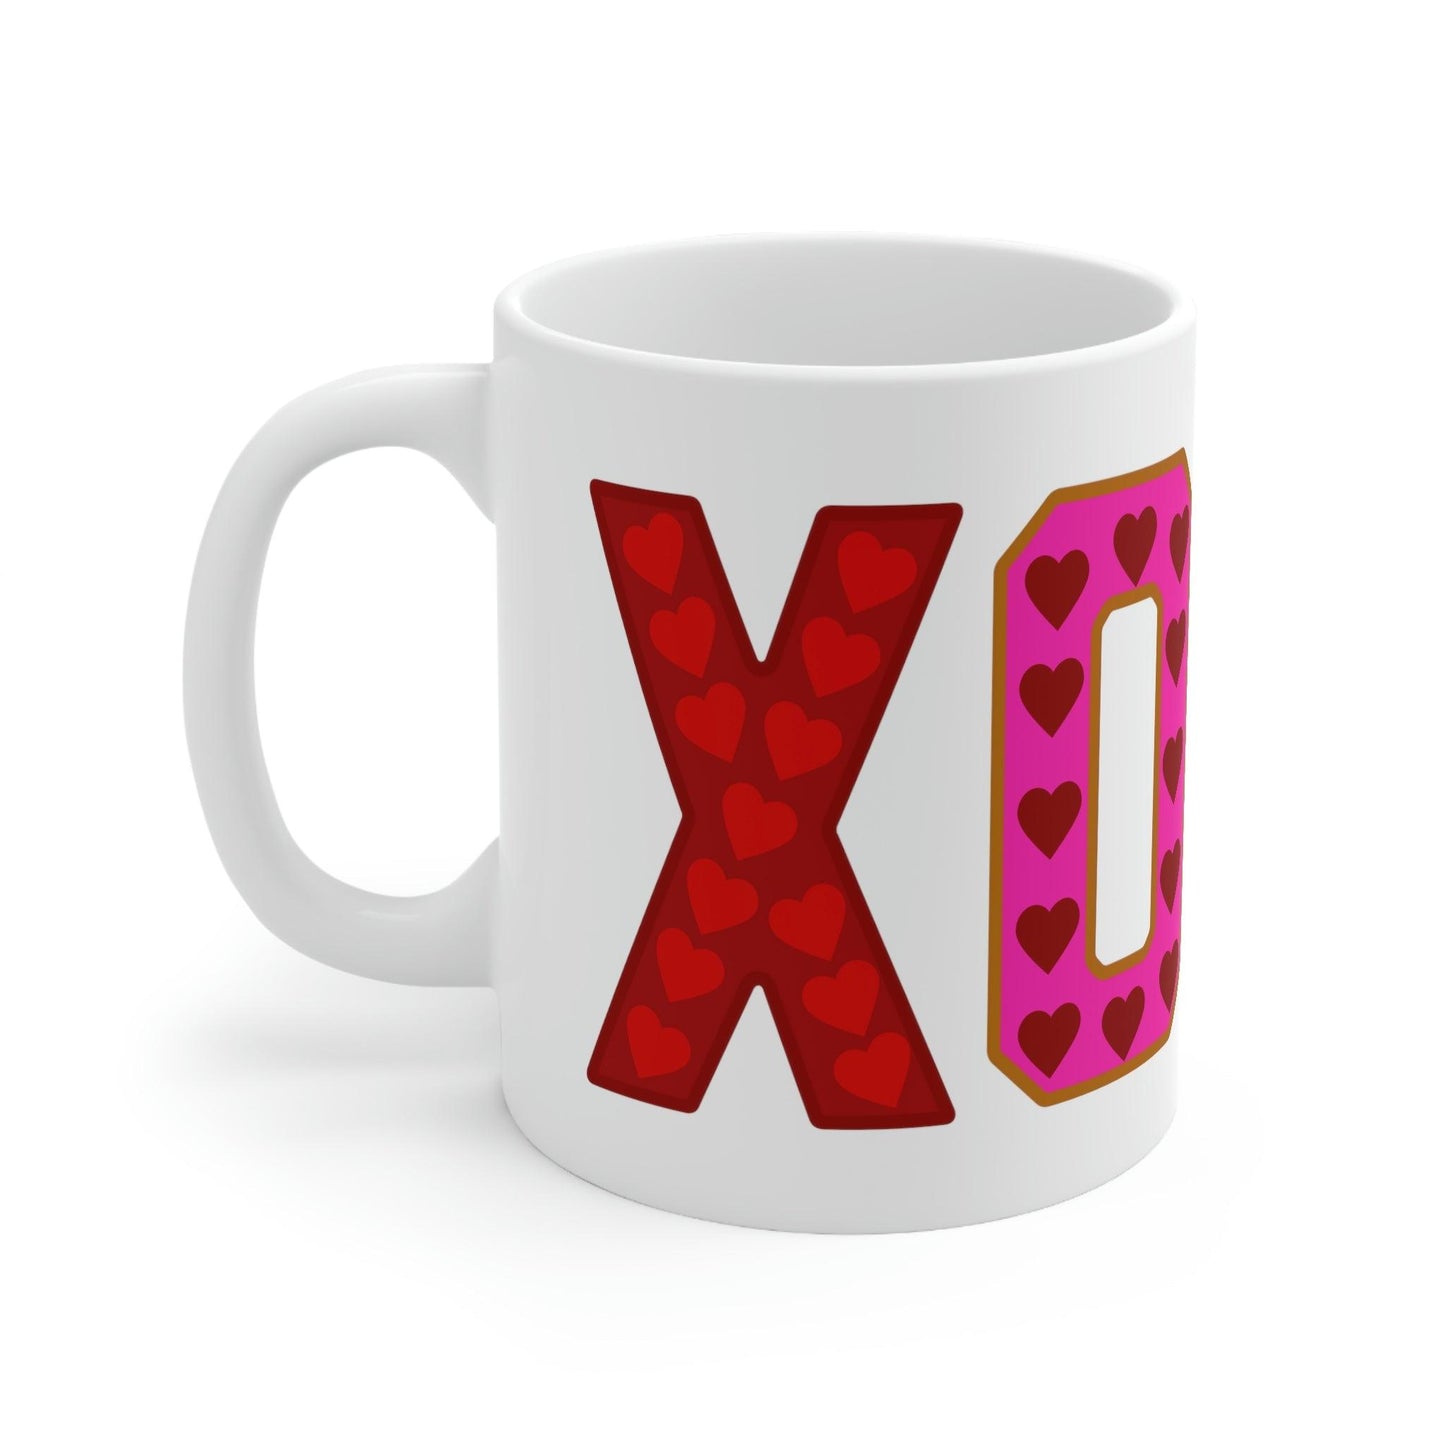 XOXO Mug - Love Mug